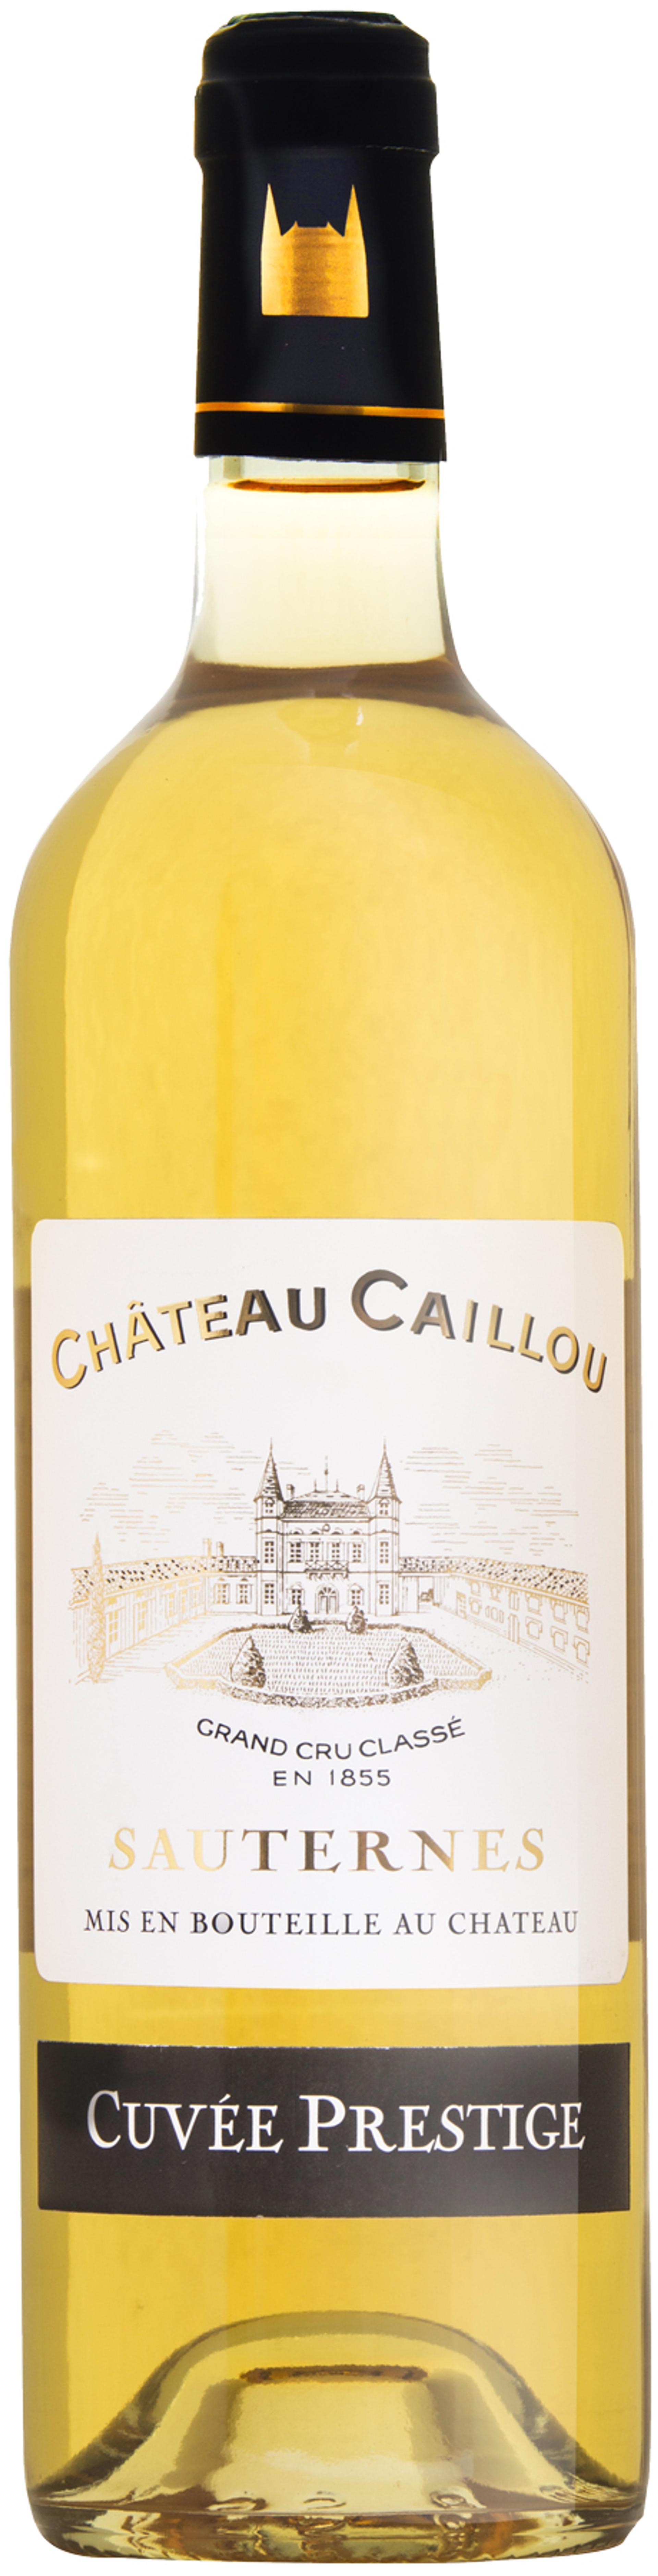 Château Caillou "Cuvée Prestige"